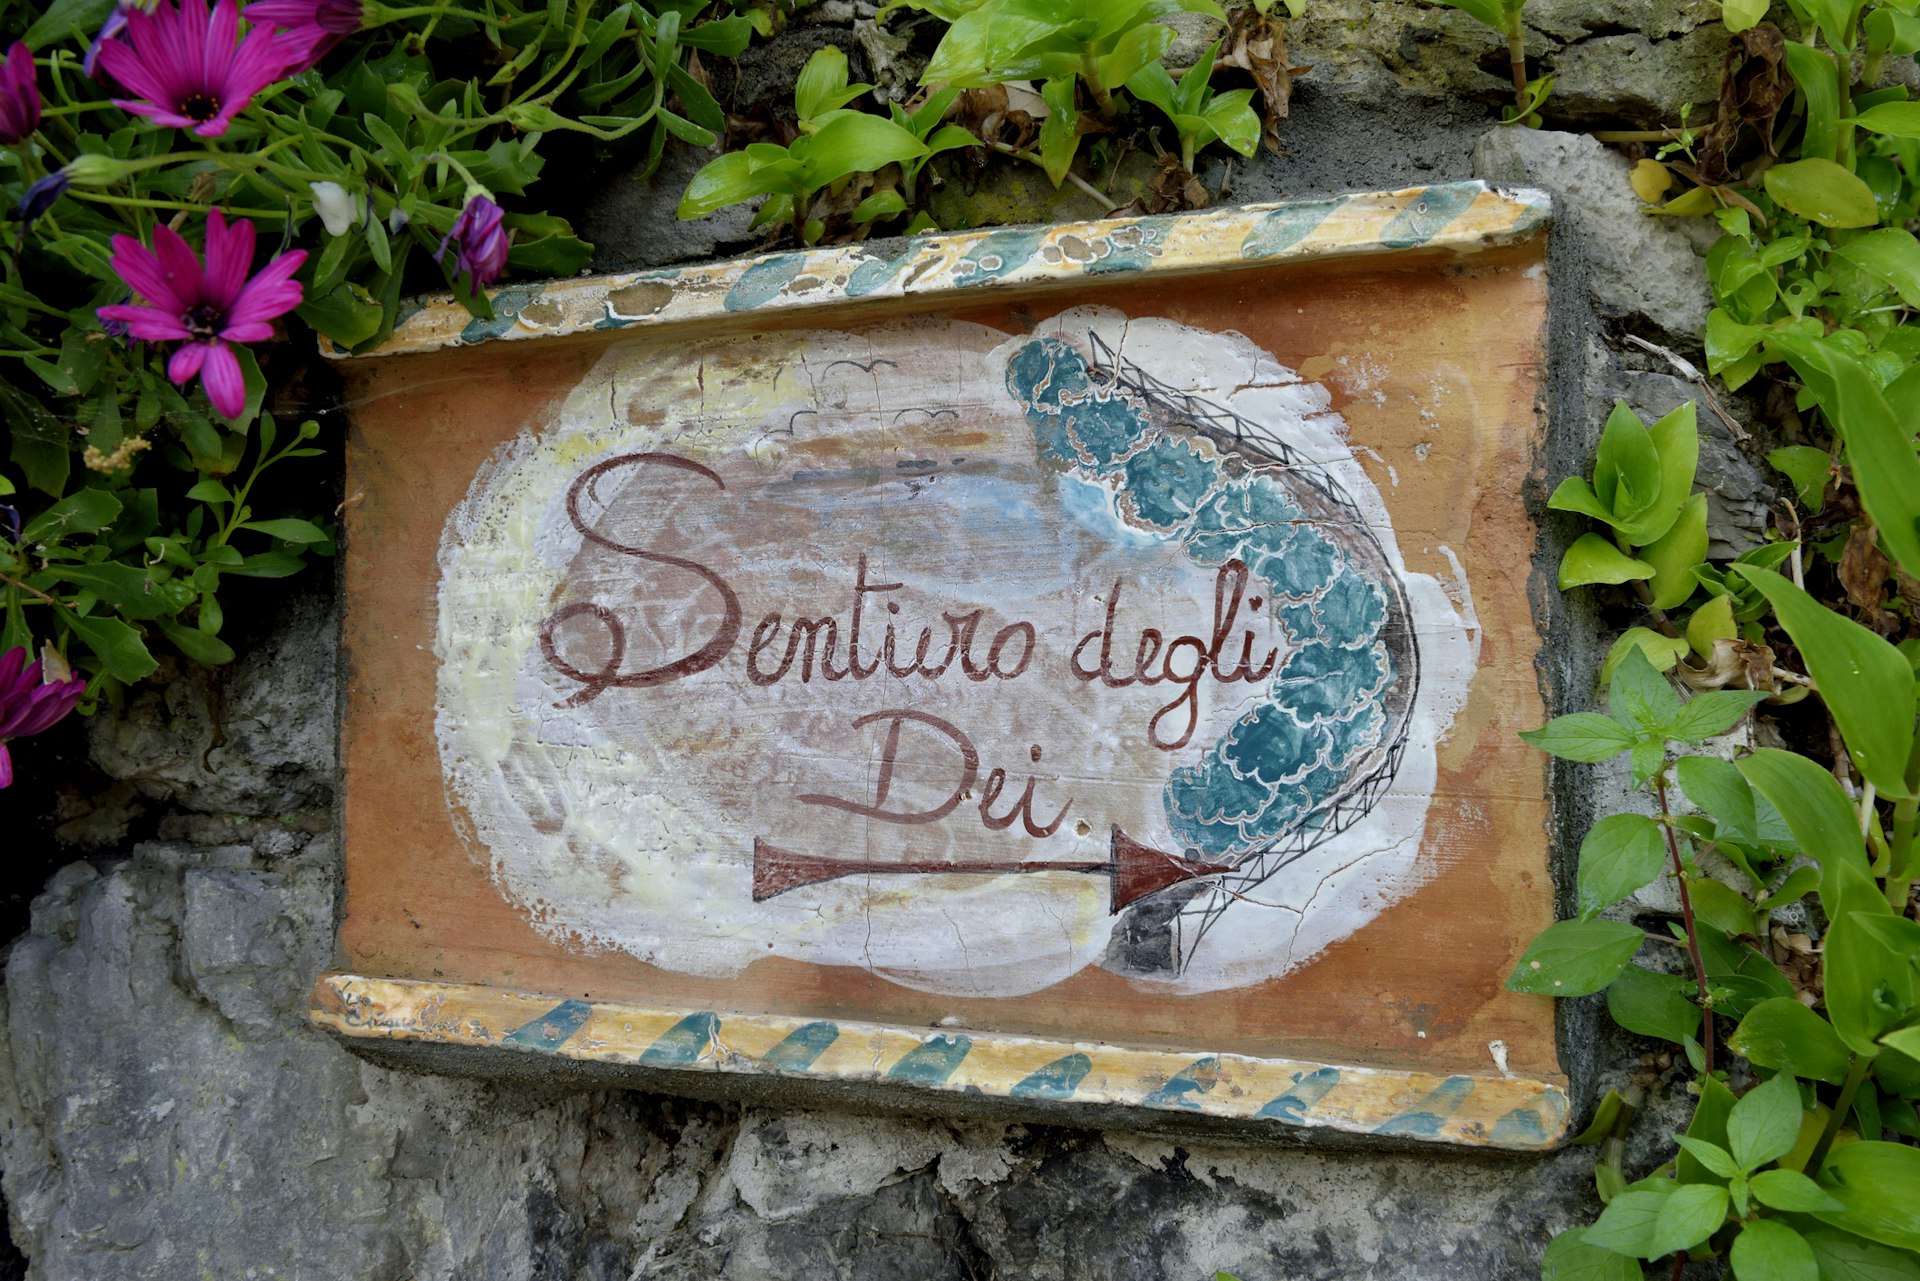 A hand designed sign says Sentiero degli dei, or the Italian name for the Path of the Gods. 